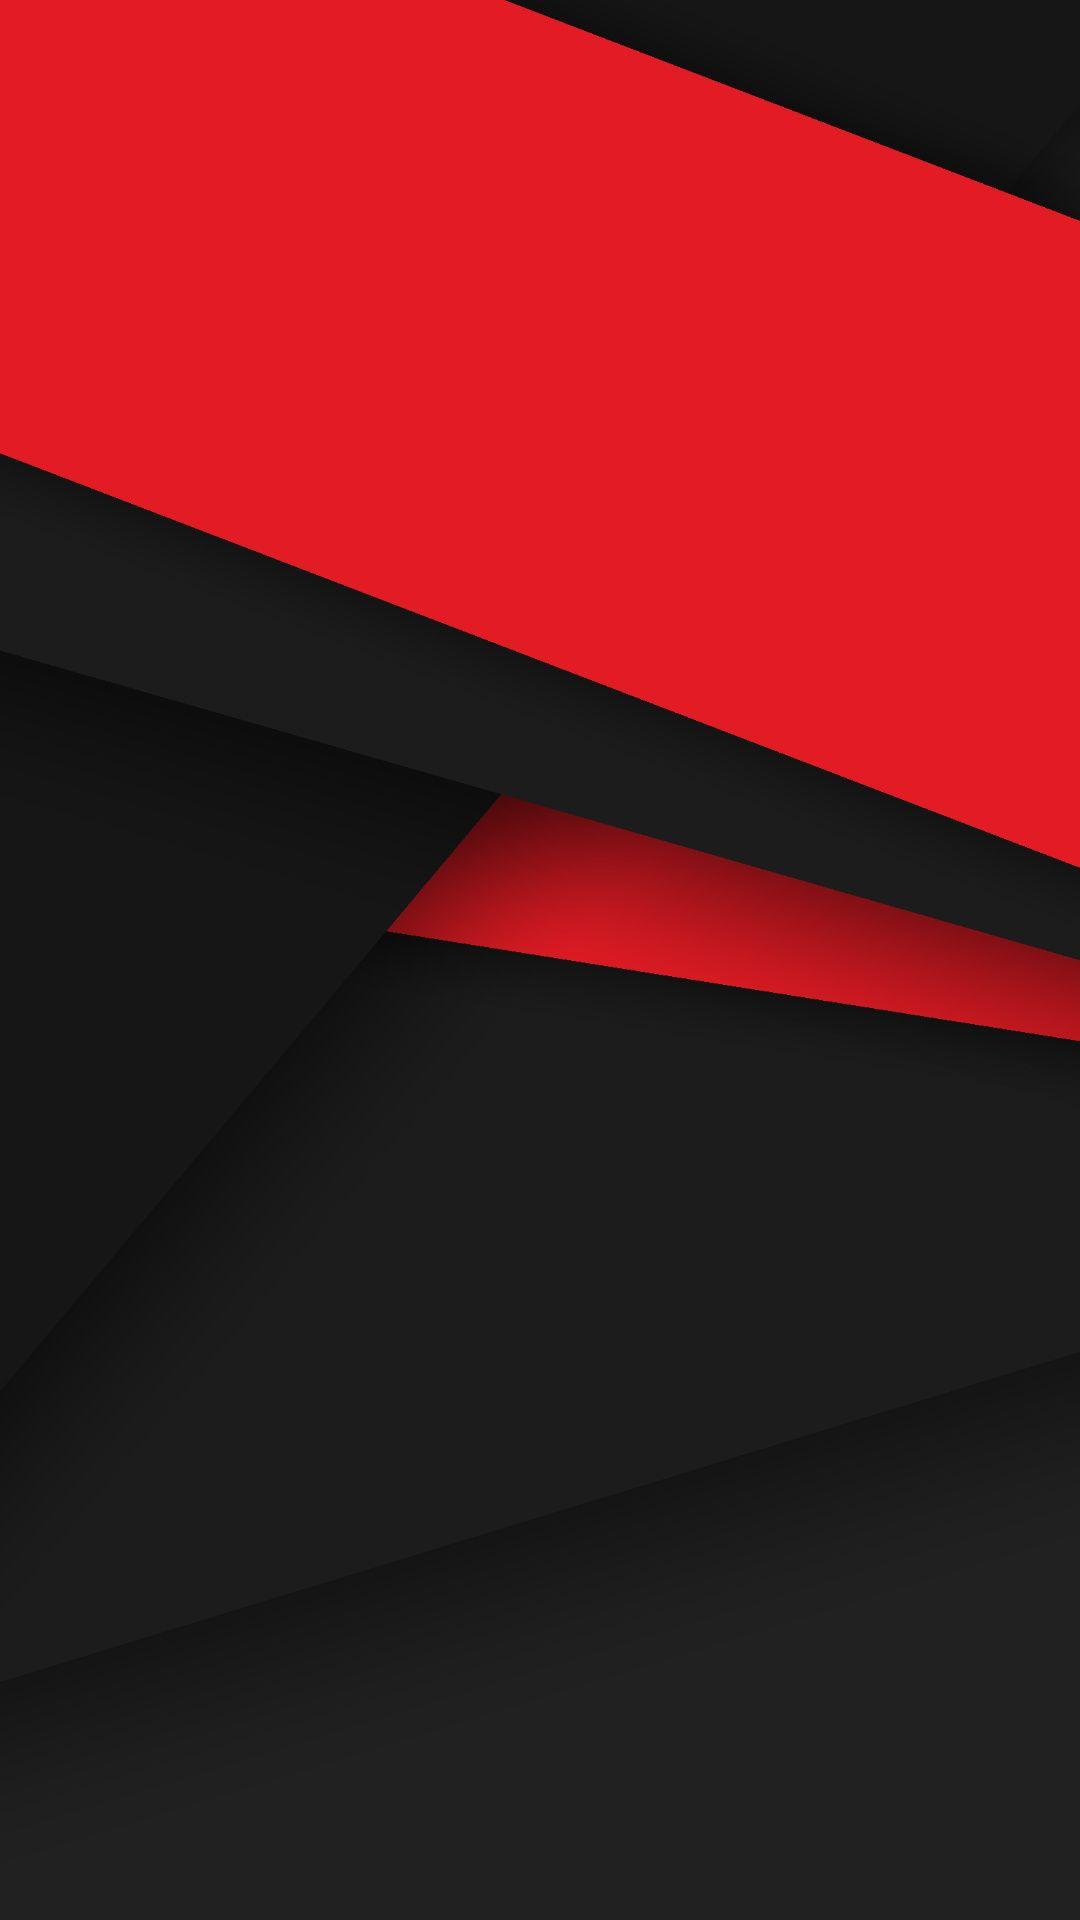 40 Gambar Black and Red Wallpaper Hd Android terbaru 2020